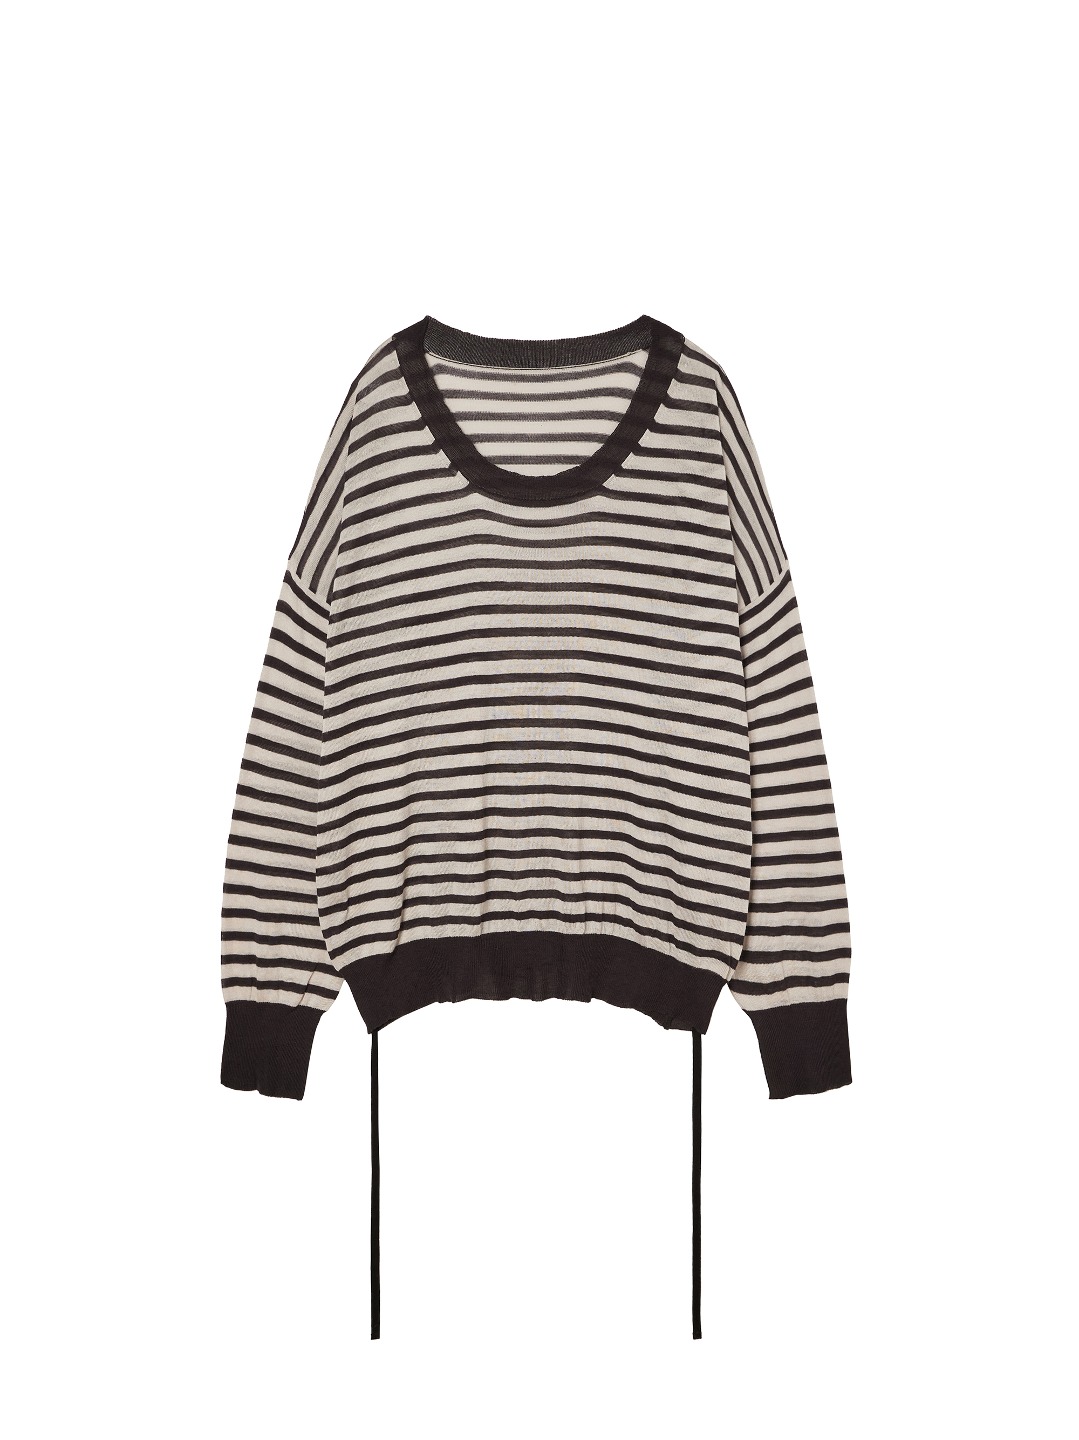 246. String Detail Striped Sweater / 스트링 디테일 스트라이프 스웨터